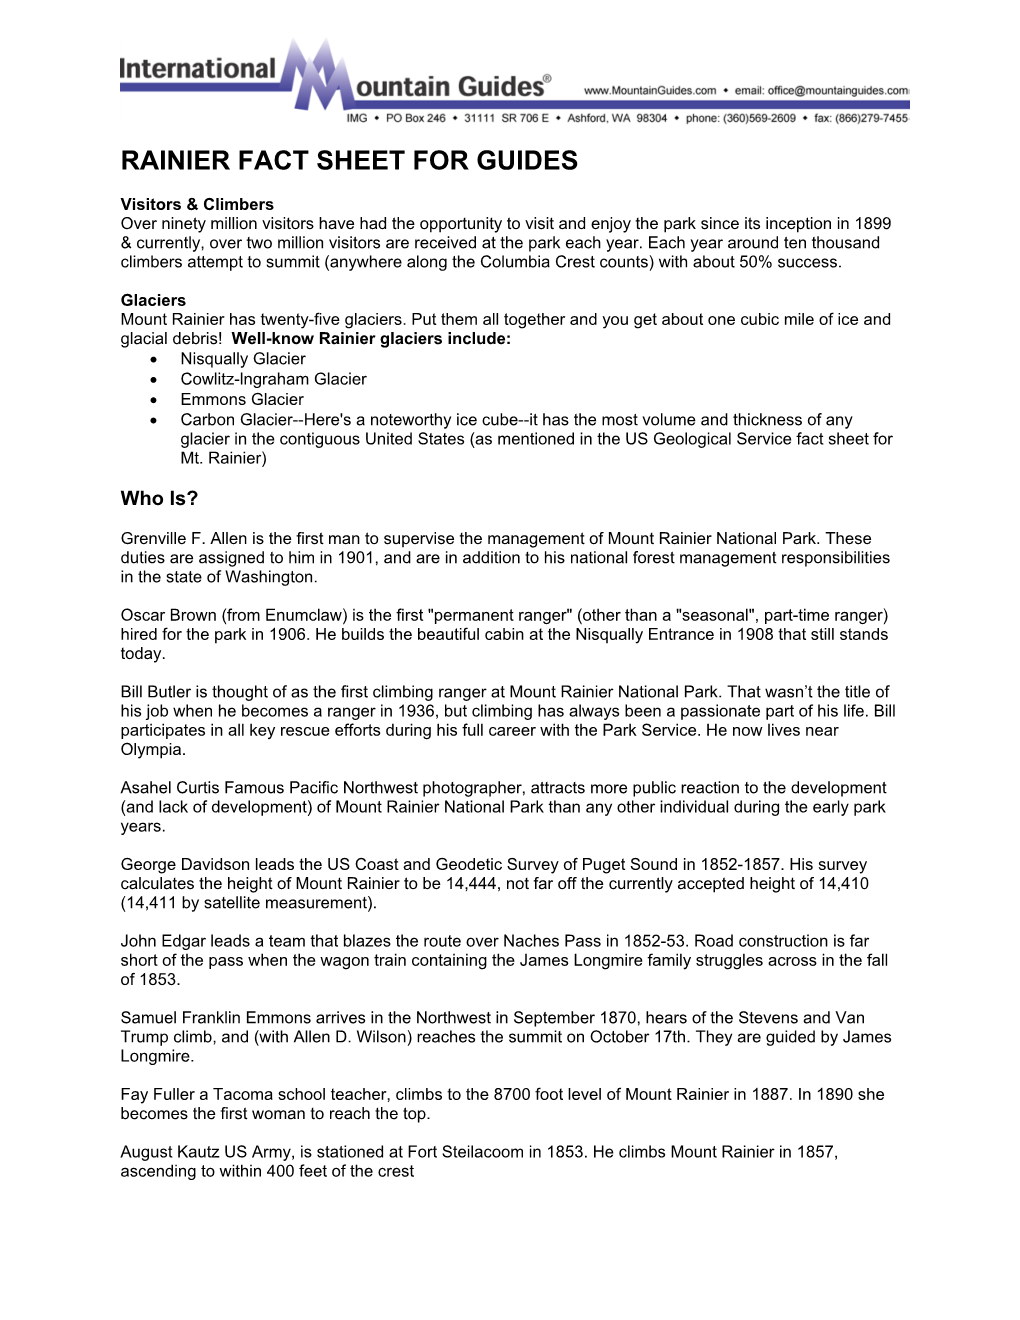 Rainier Fact Sheet for Guides